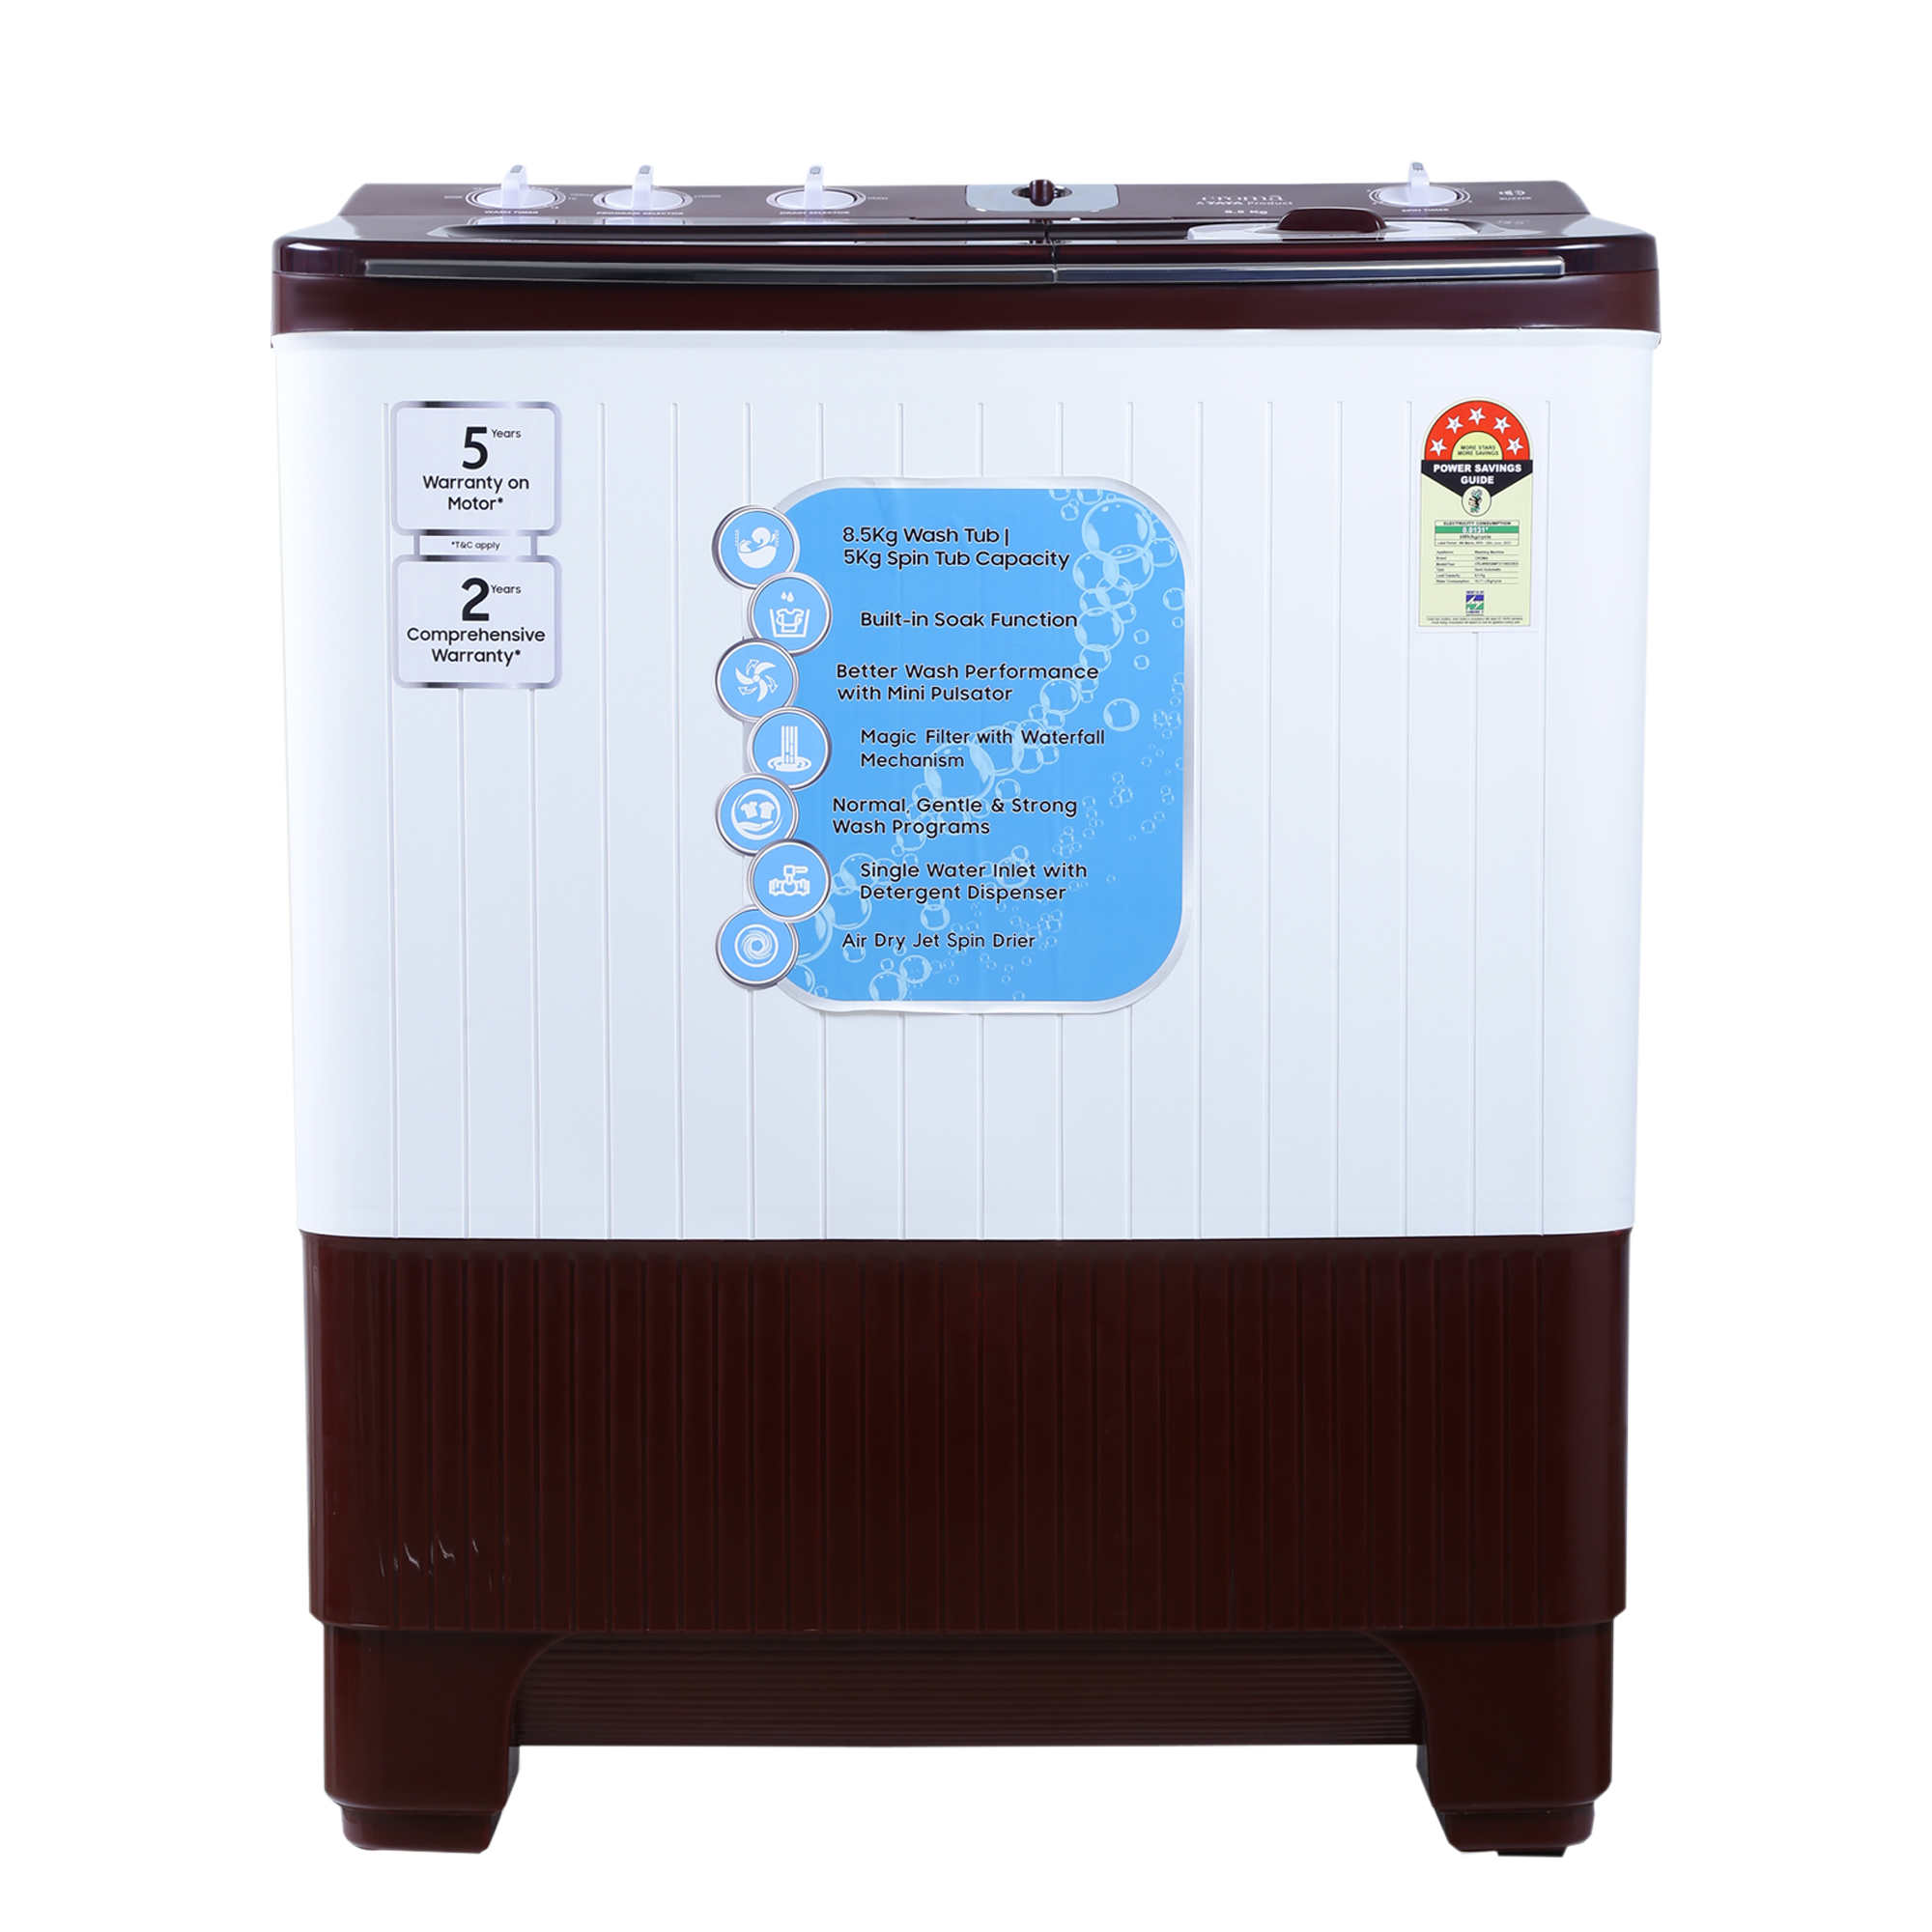 Croma 8.5 kg 5 Star Semi Automatic Washing Machine with Active Soak Function (CRLW085SMF231002, Burgundy)